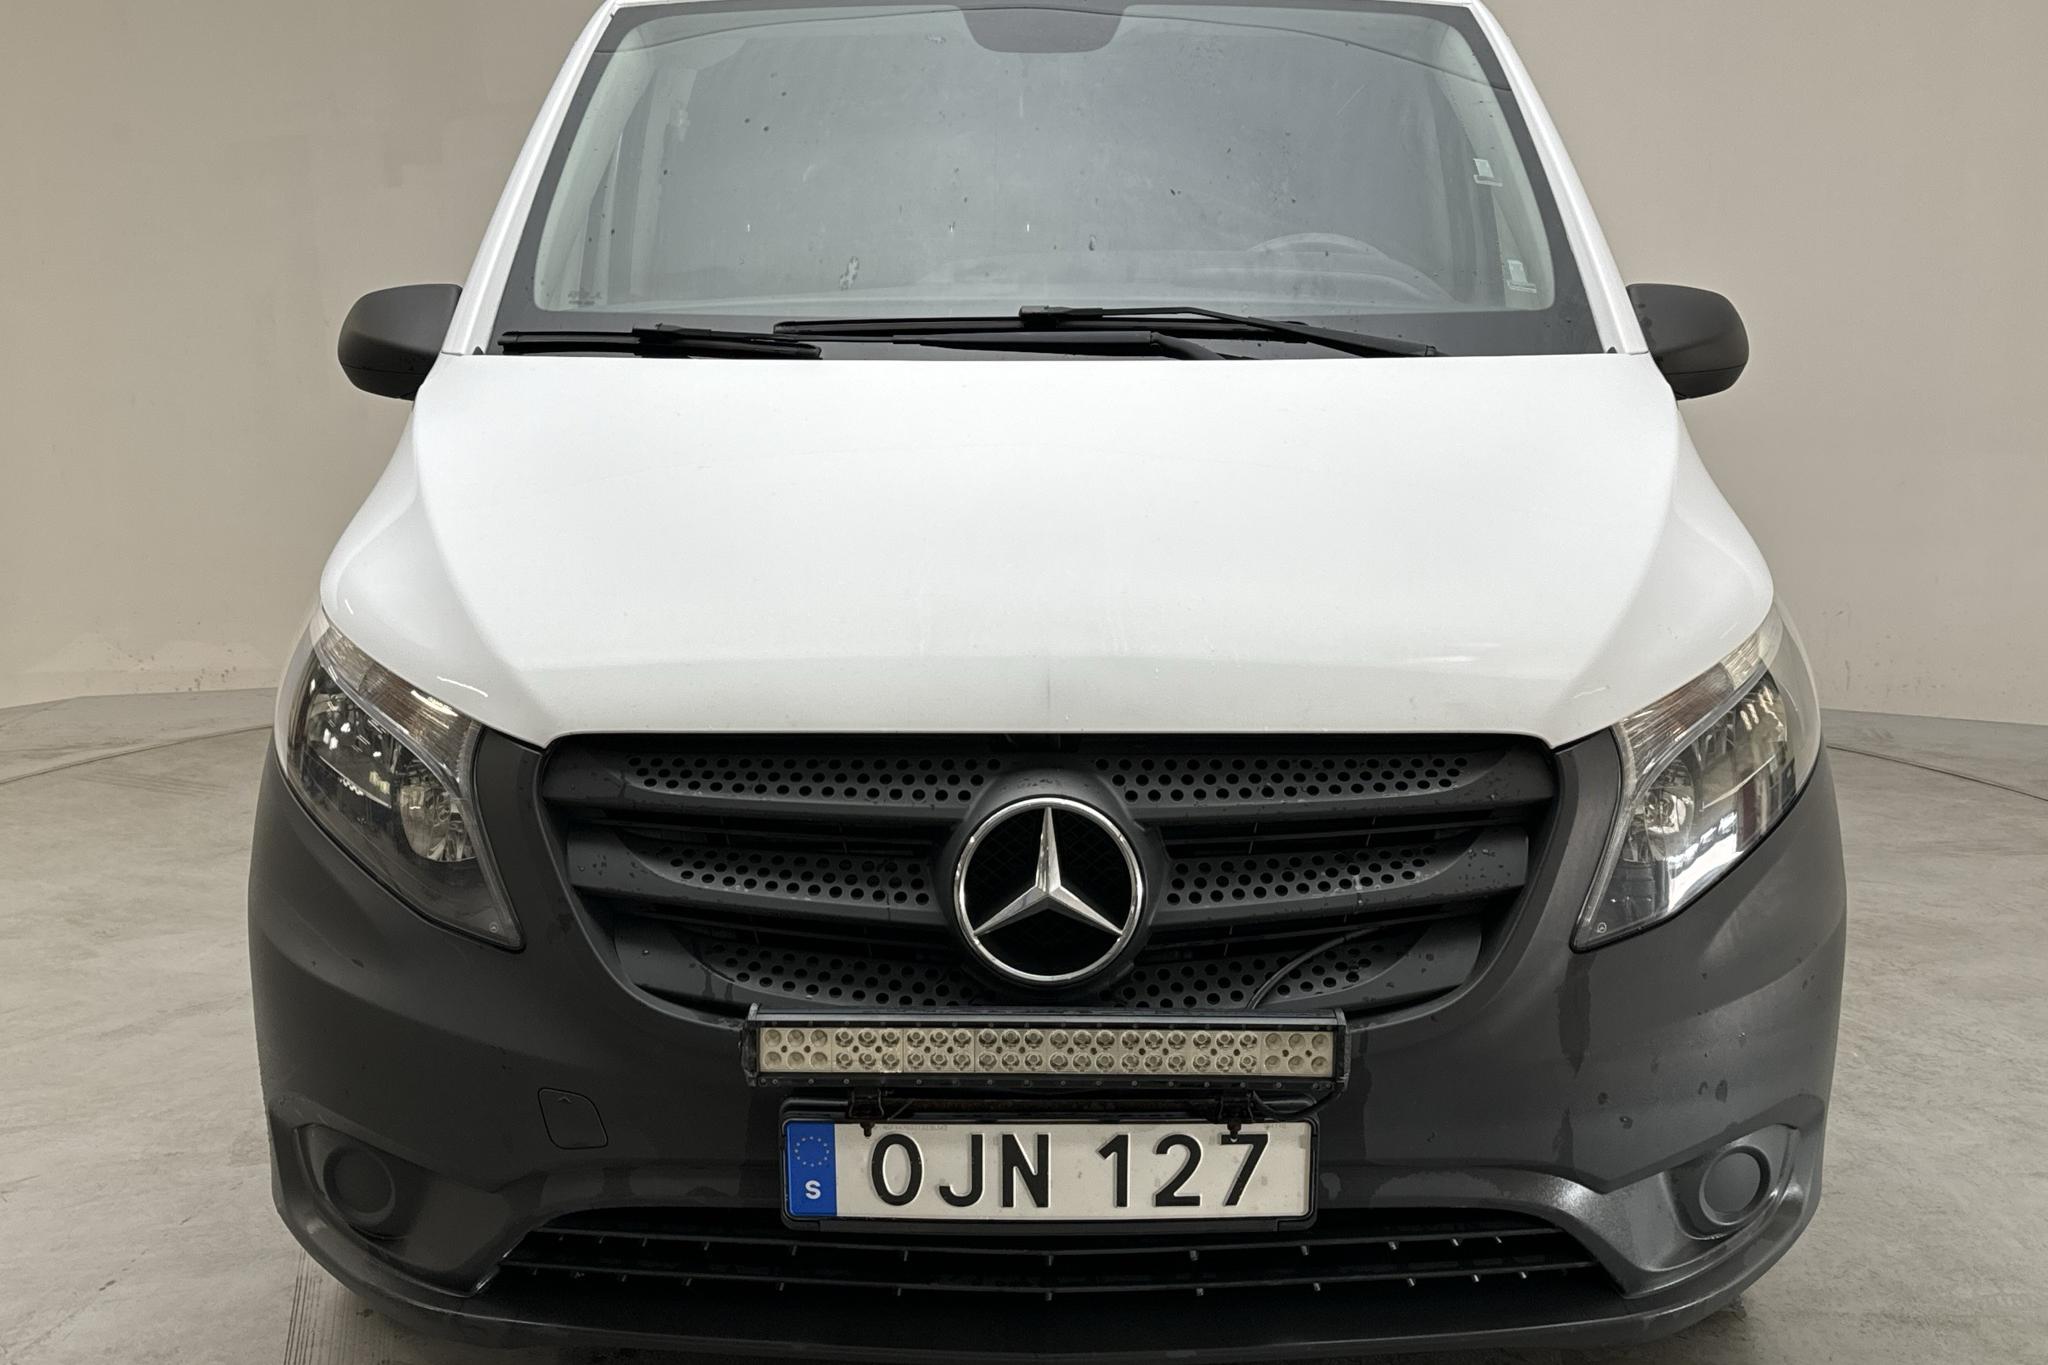 Mercedes Vito 109 CDI W640 (88hk) - 120 020 km - Manual - white - 2017